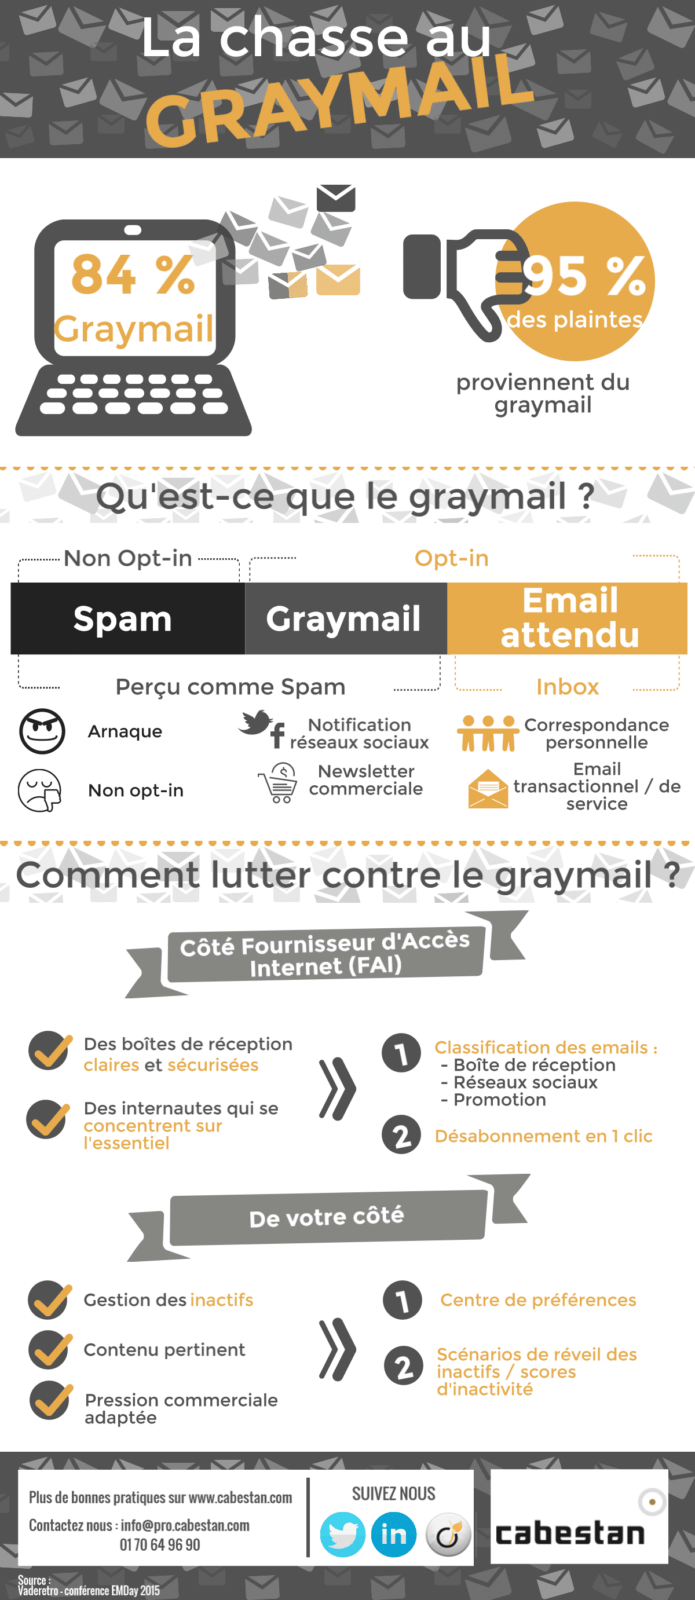 graymail-management